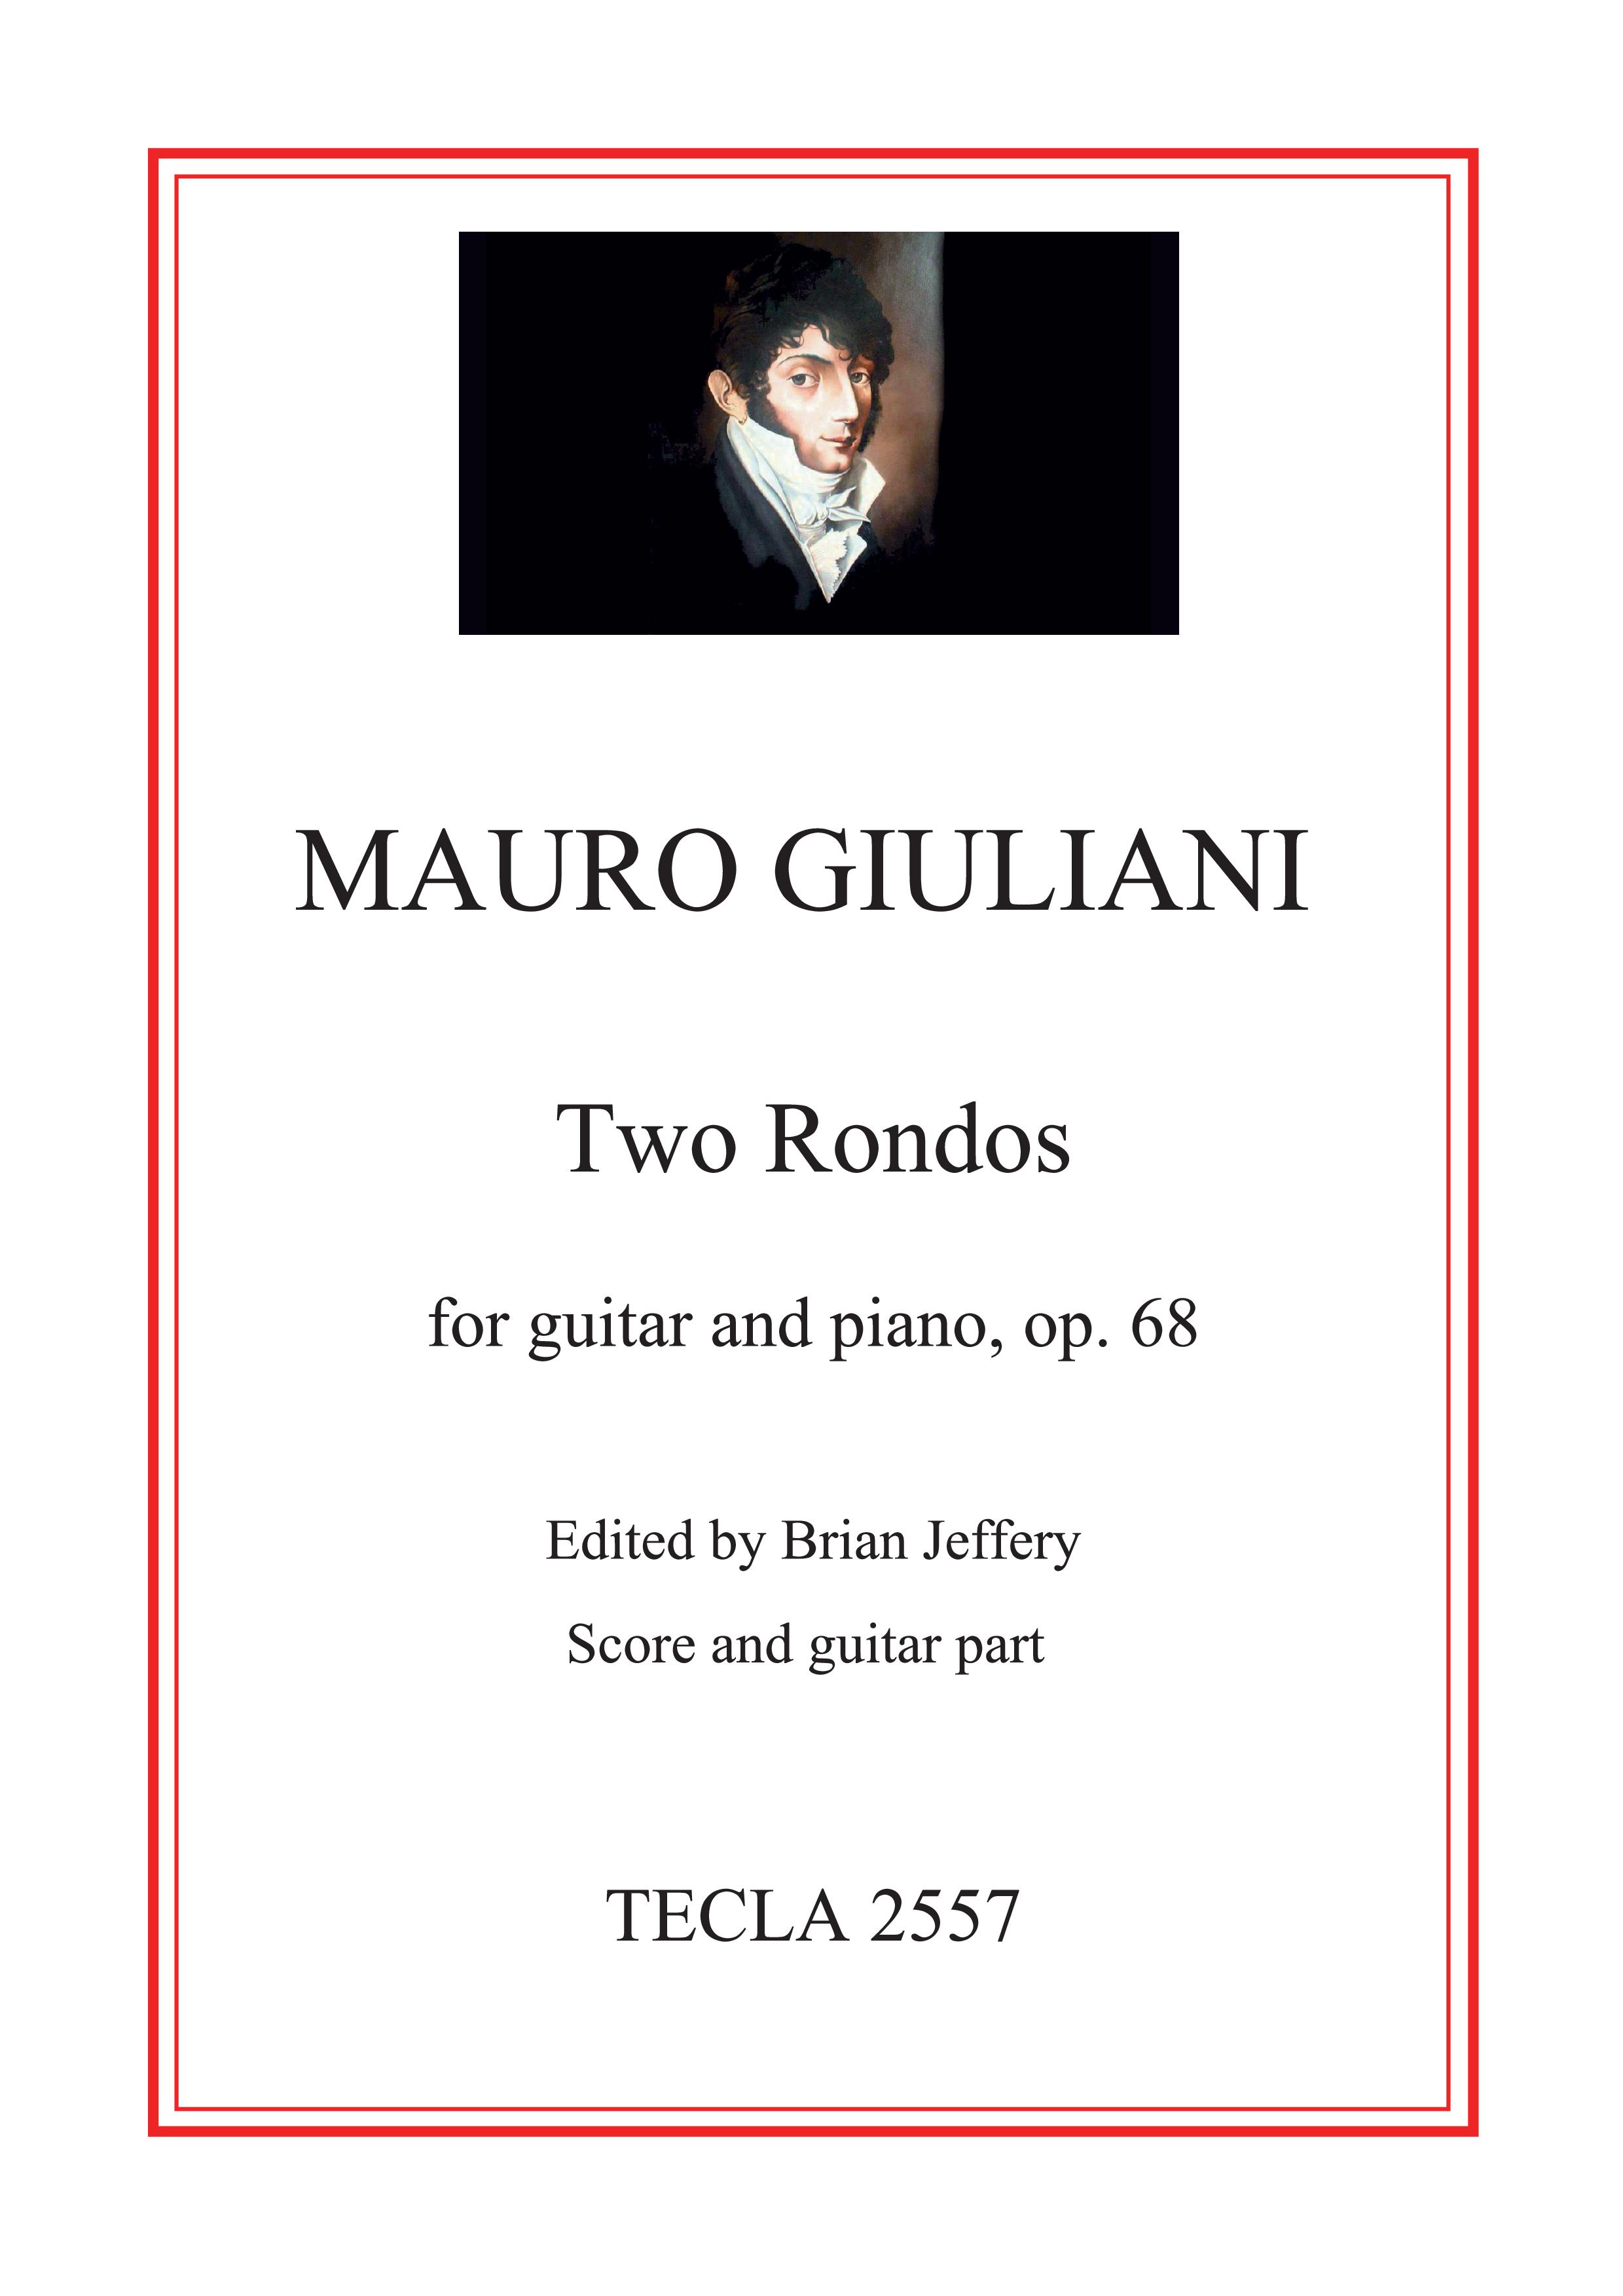 Giuliani Two Rondos Op68 Guitar & Keyboard Sheet Music Songbook